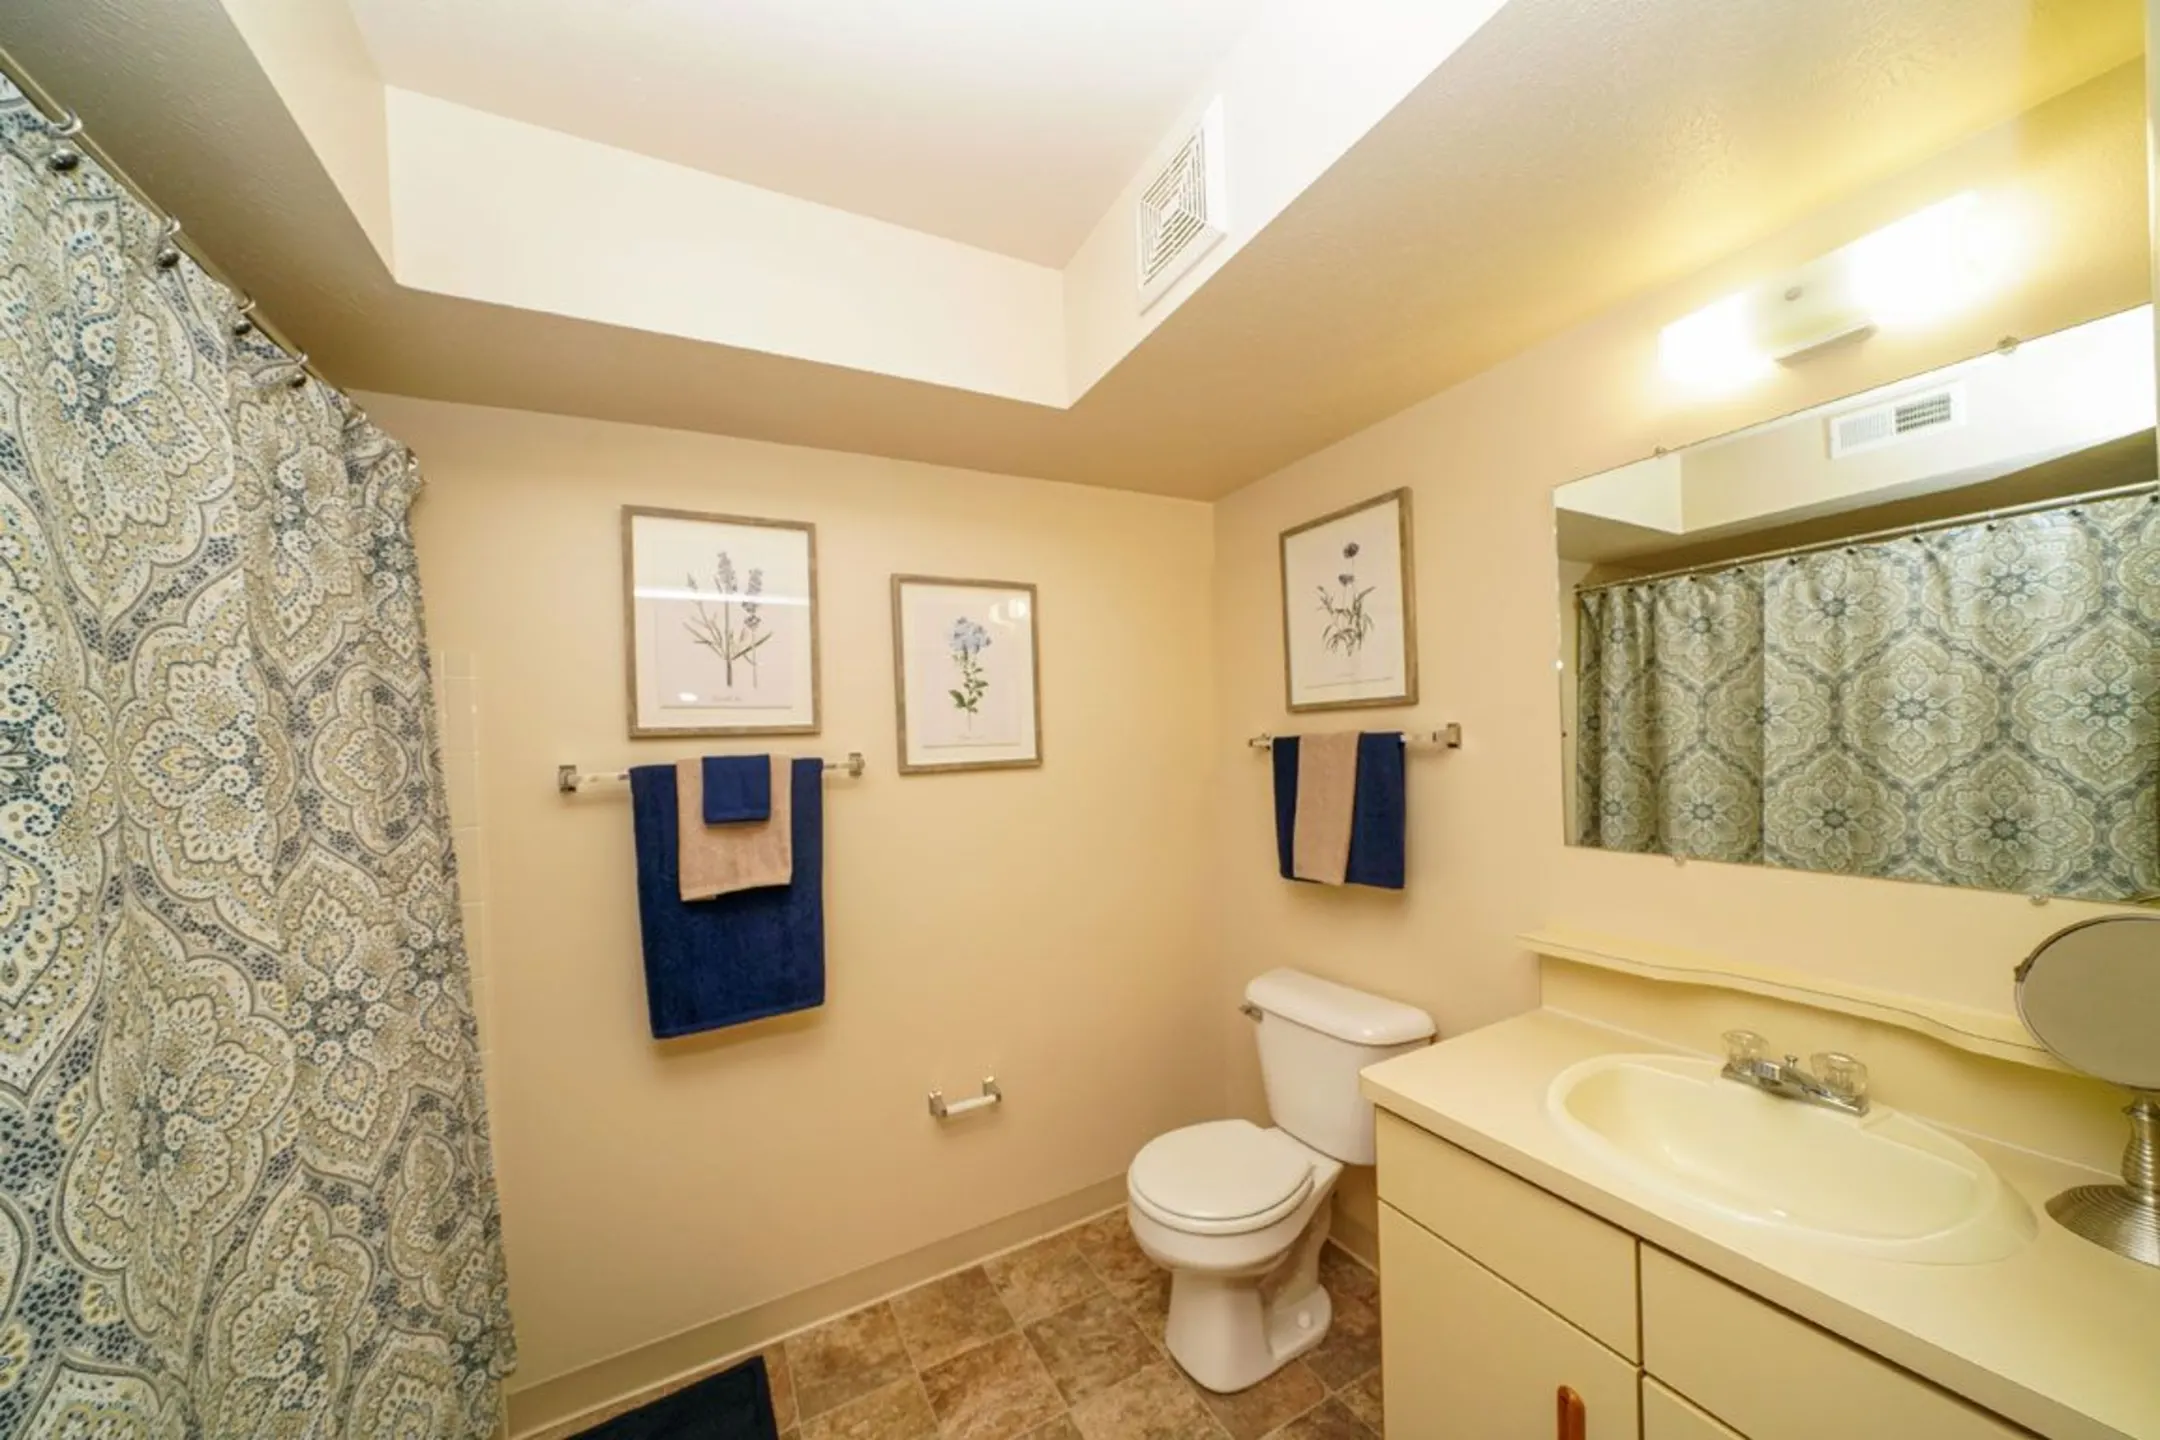 Bathroom - Foxwood Apartments & The Hermitage Townhomes - Portage, MI